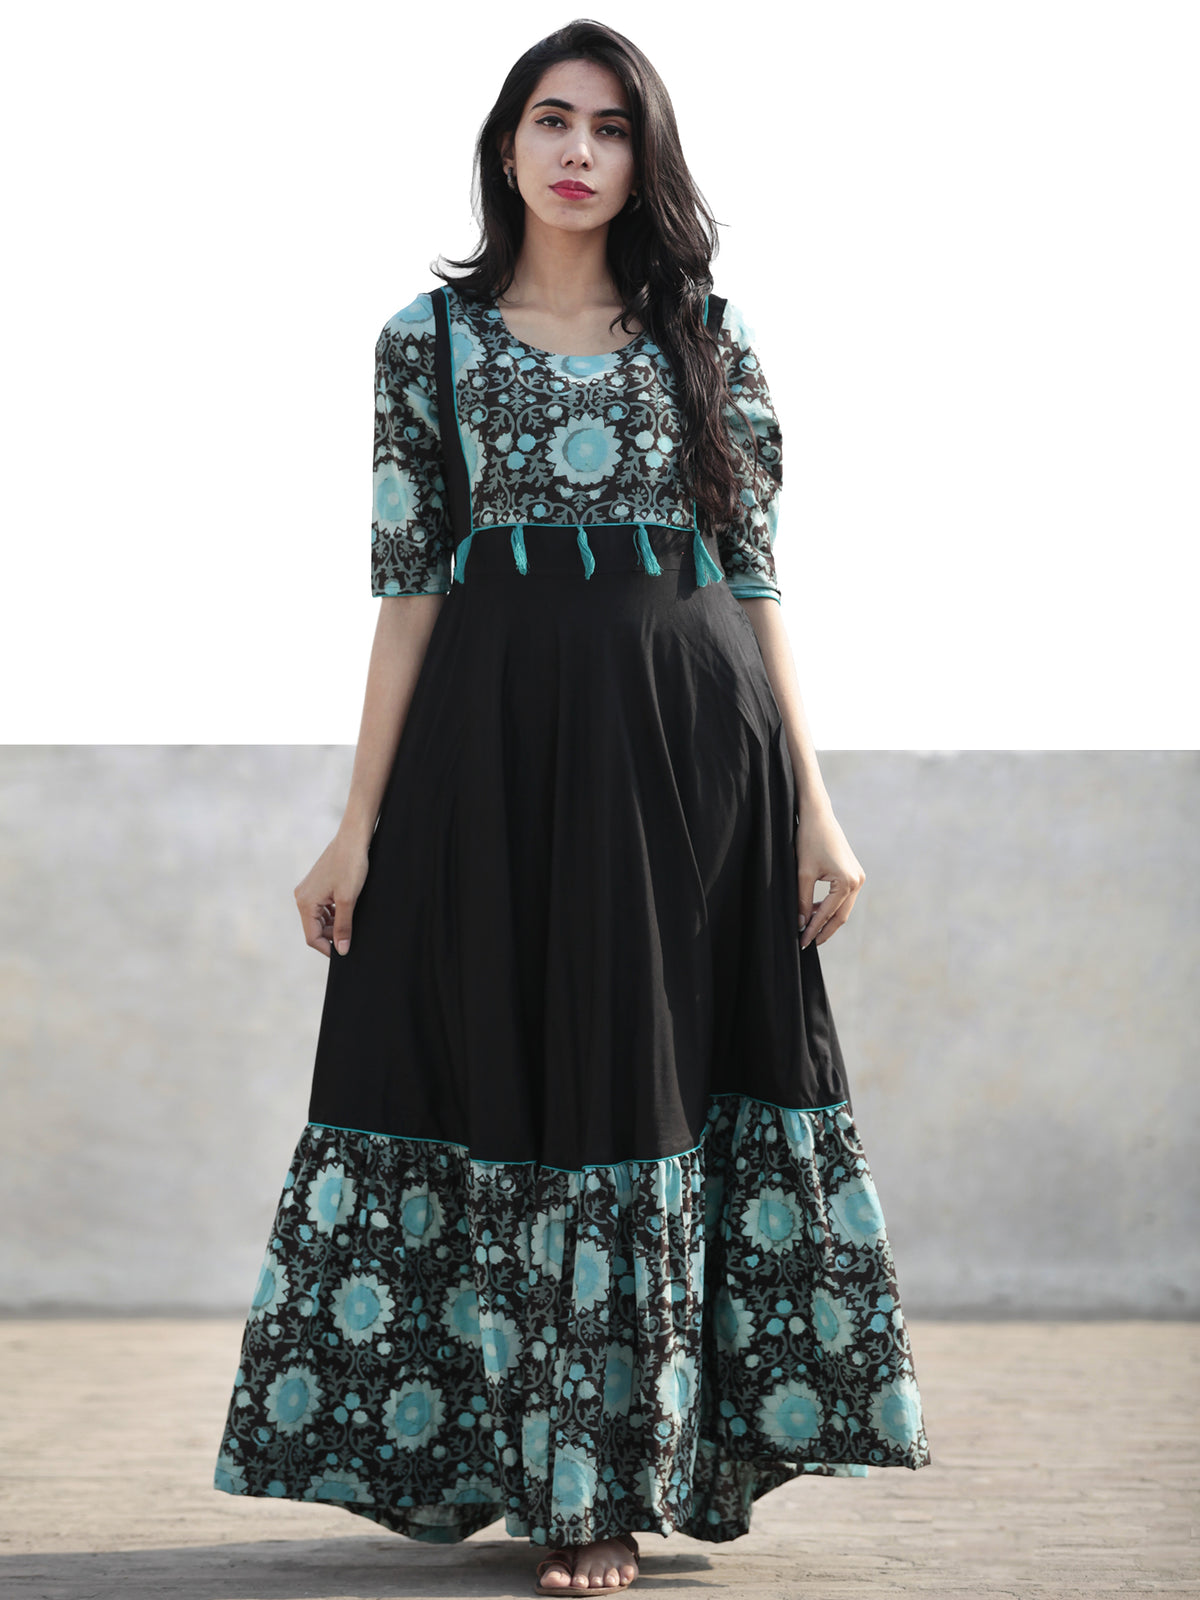 Black Sea Green Hand Blocked Long Cotton Rayon Dress With Tassel - D181F1062